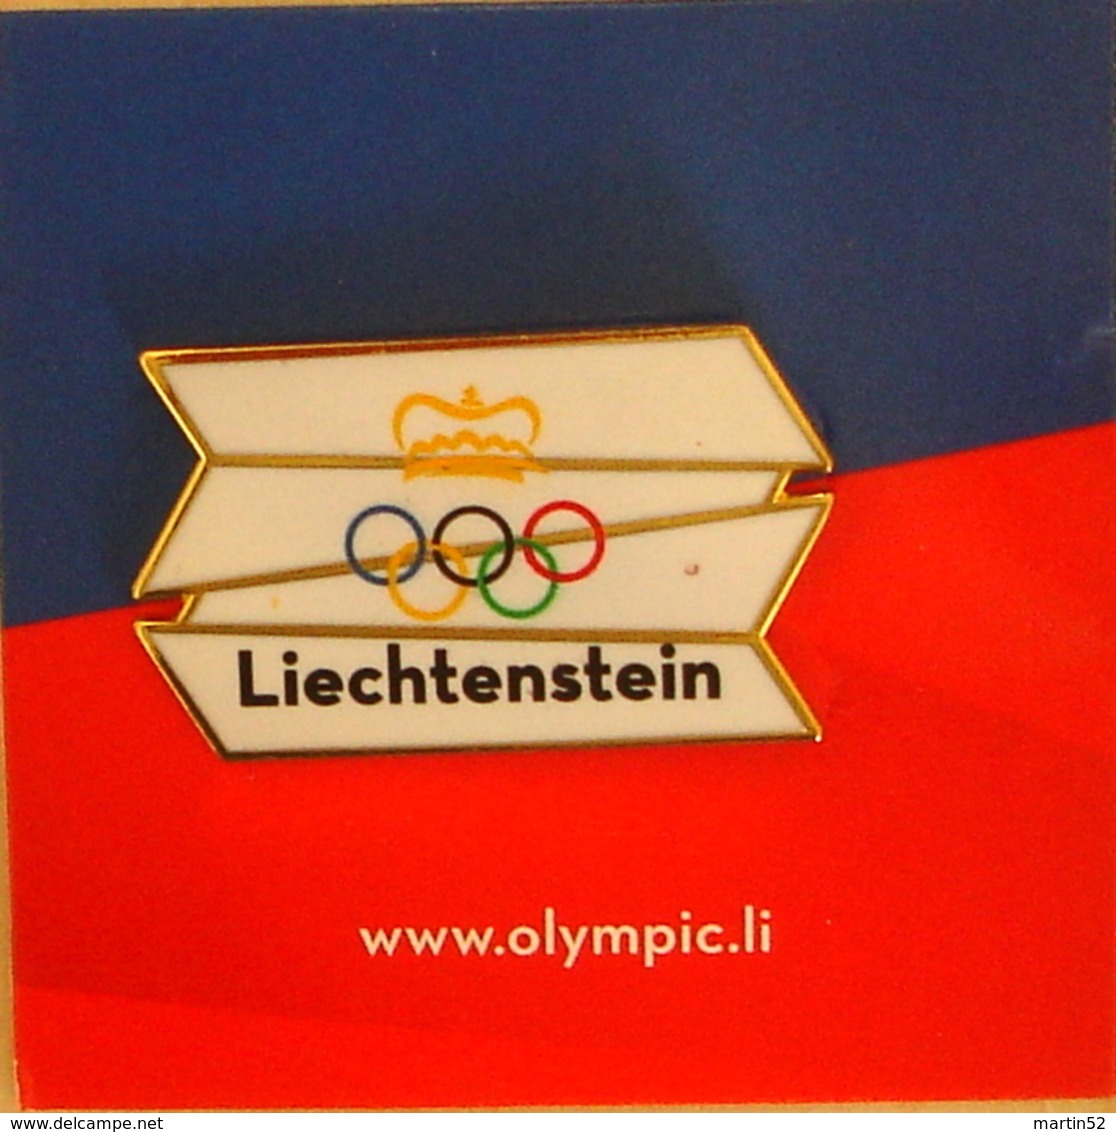 Liechtenstein : Pin Des Olympischen Komitees Olympic Committee (www.olympic.li) - Jeux Olympiques